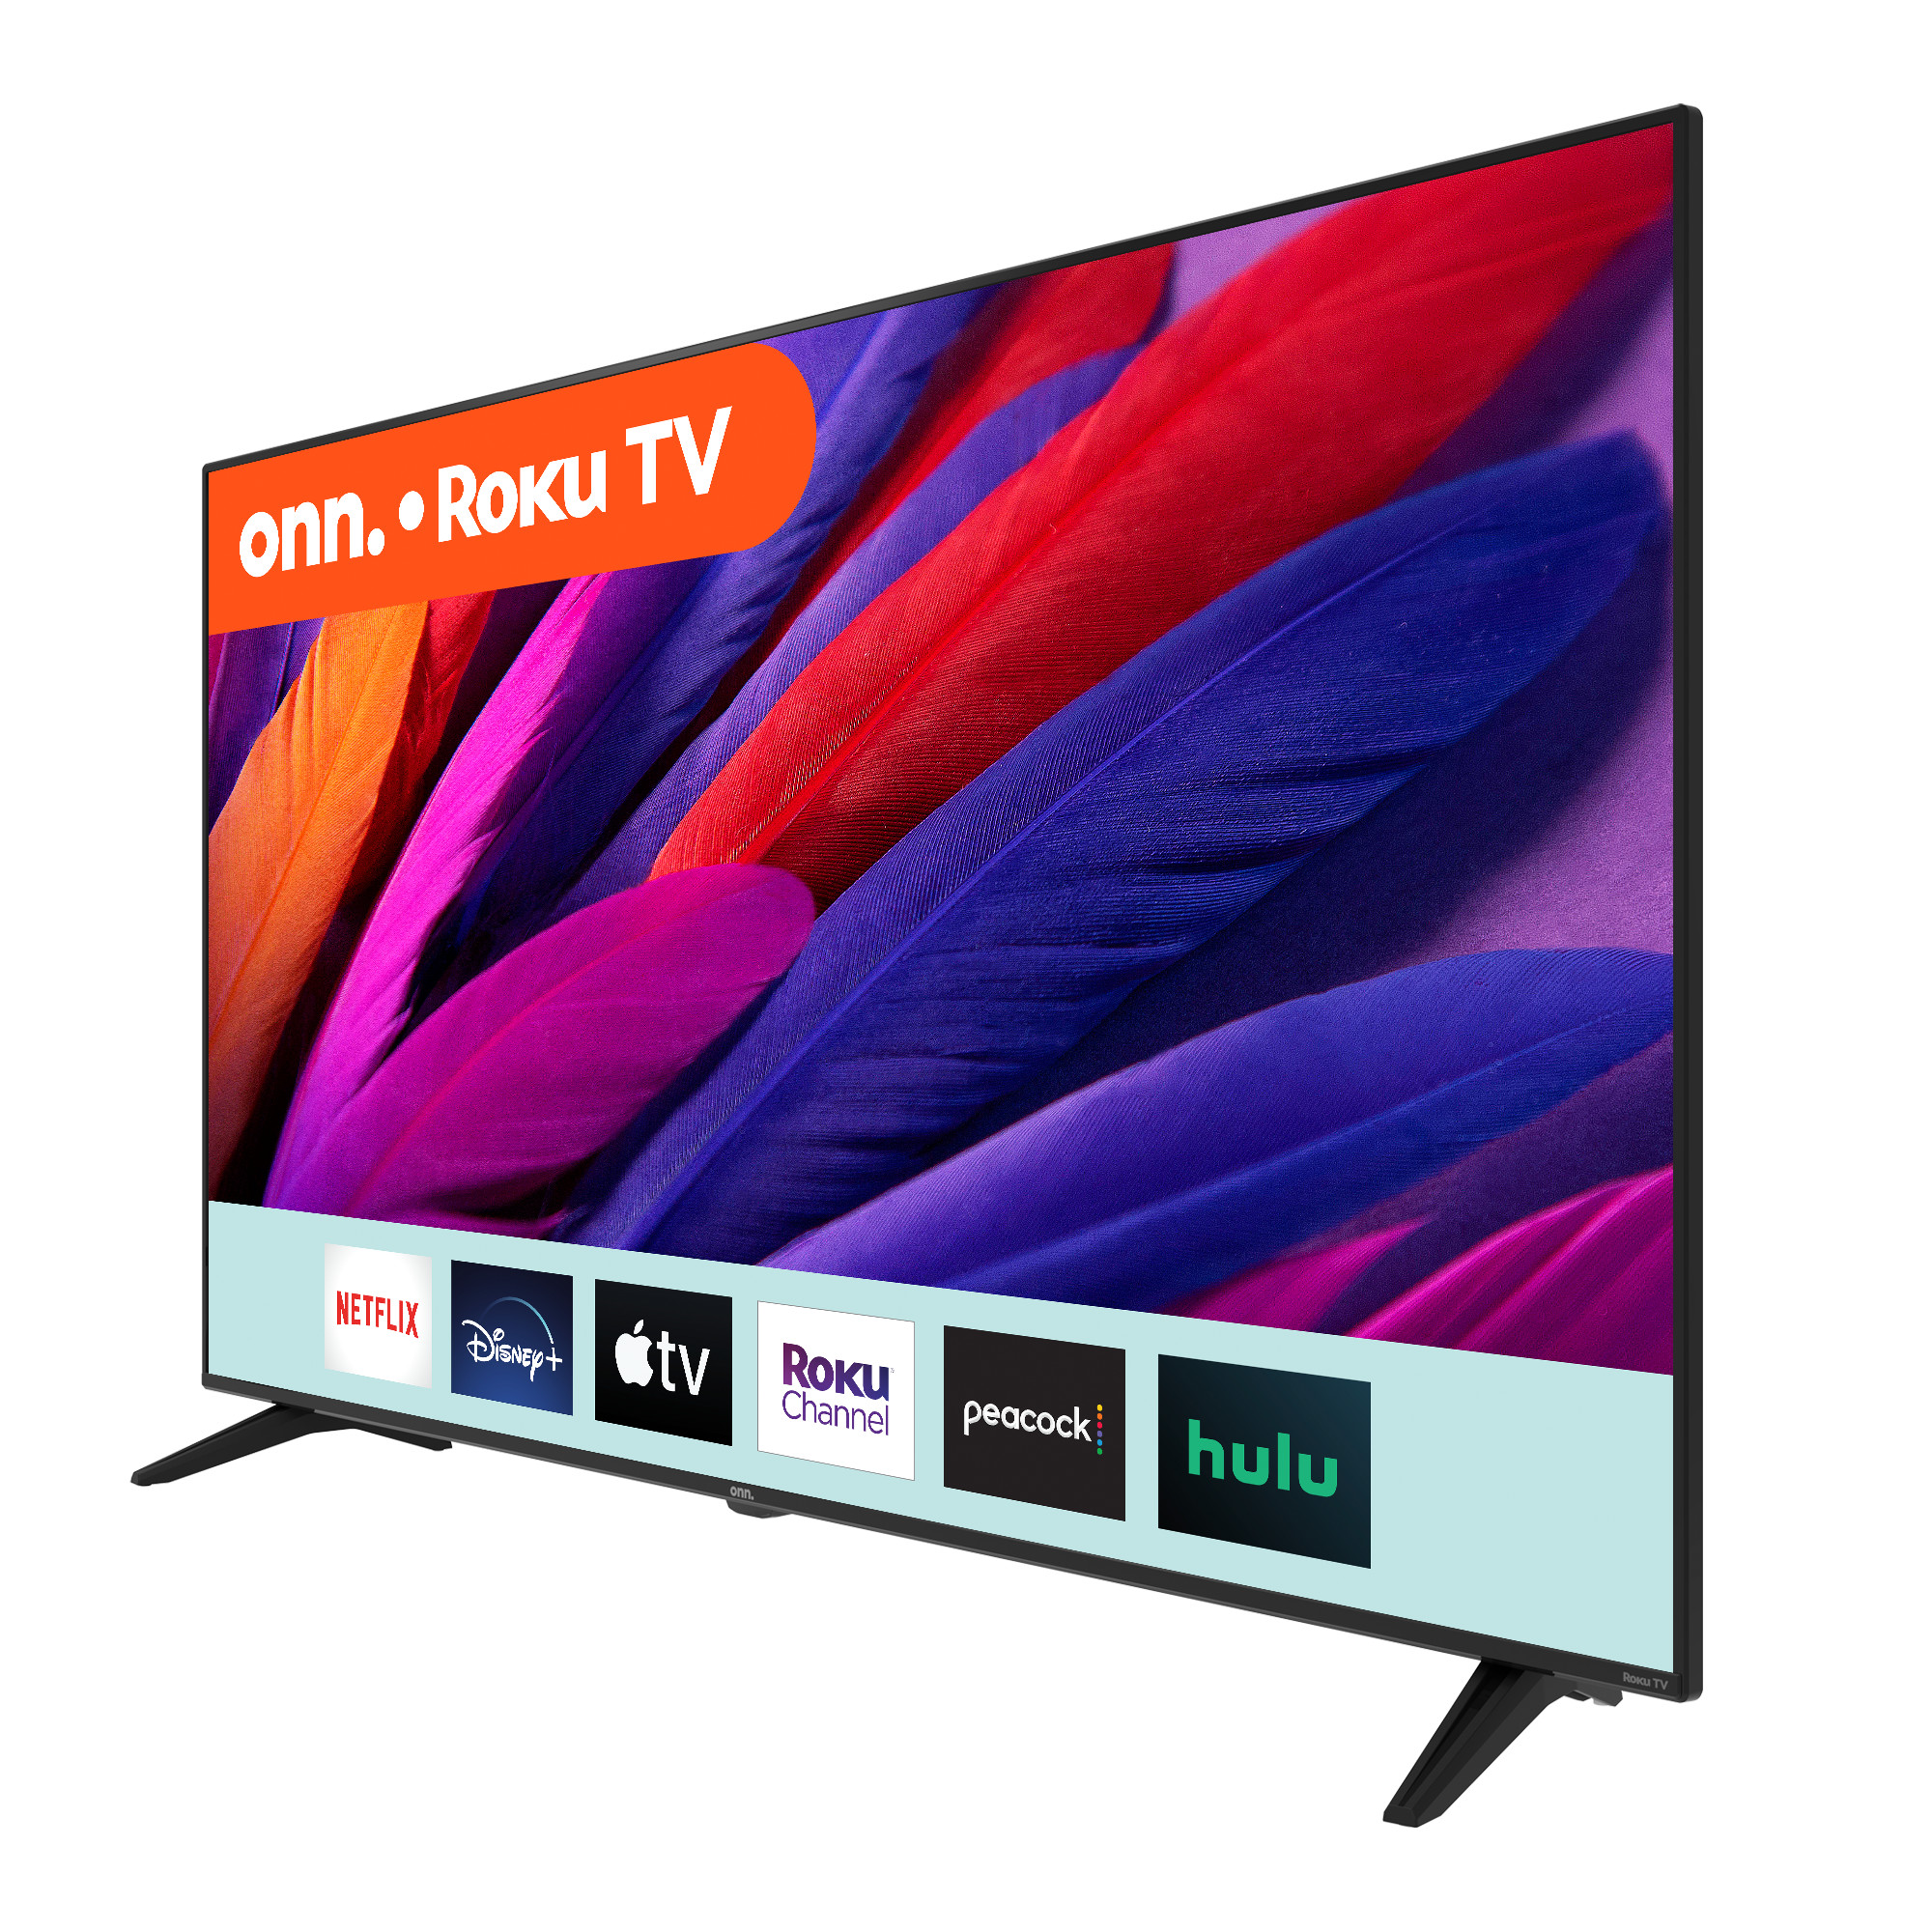 onn. 65” Class 4K UHD (2160P) LED Roku Smart Television HDR (100012587) - image 4 of 19